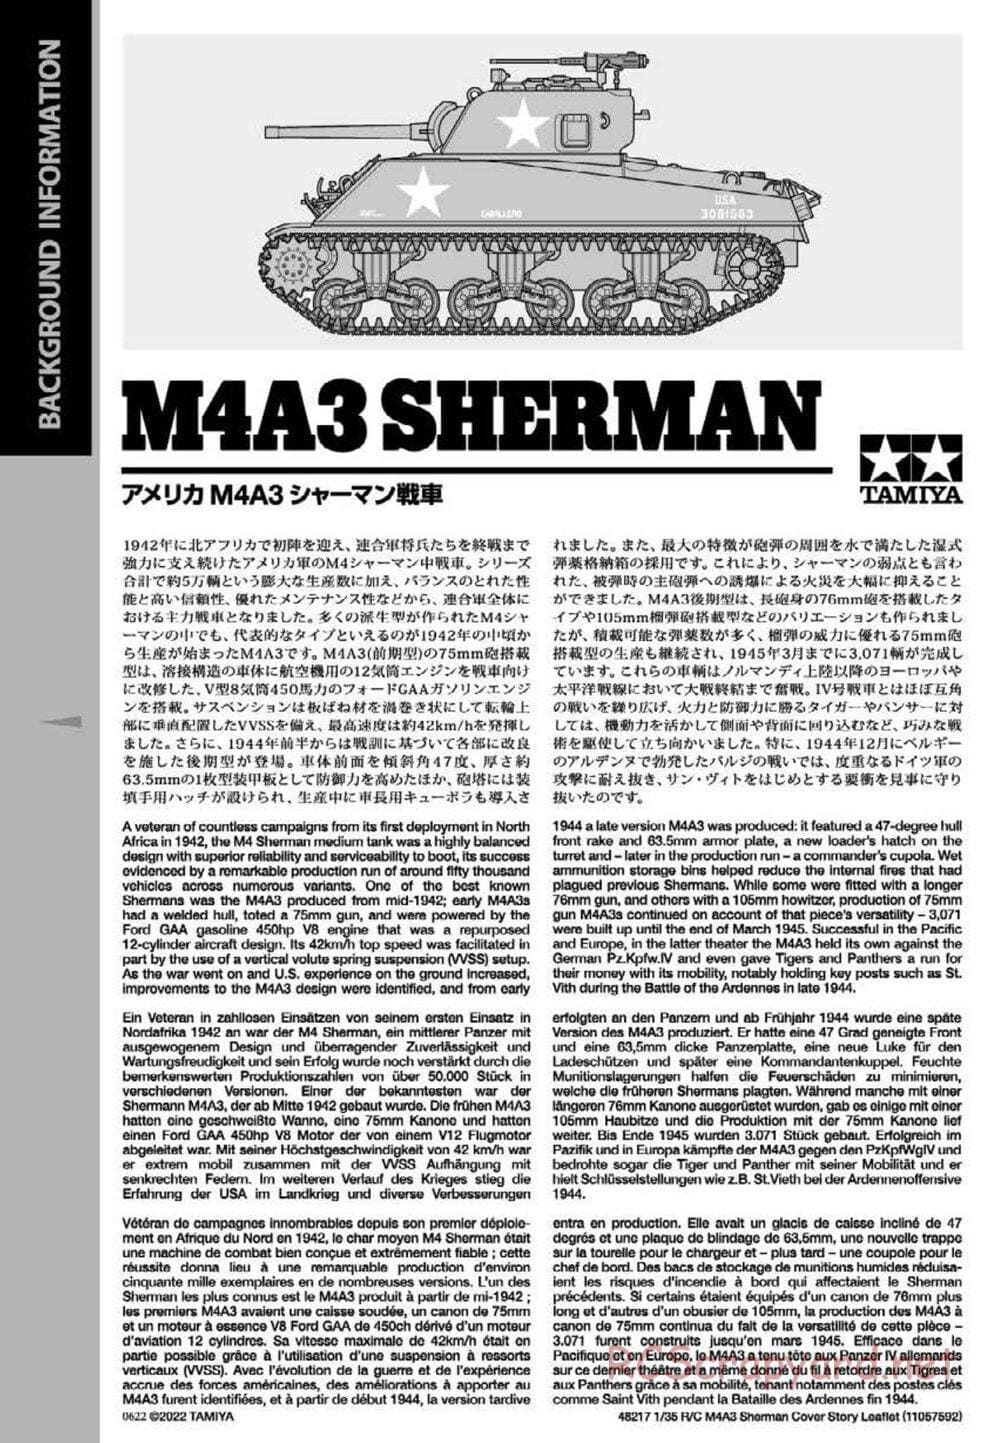 Tamiya - US Medium Tank M4A3 Sherman - 1/35 Scale Chassis - Manual - Page 21